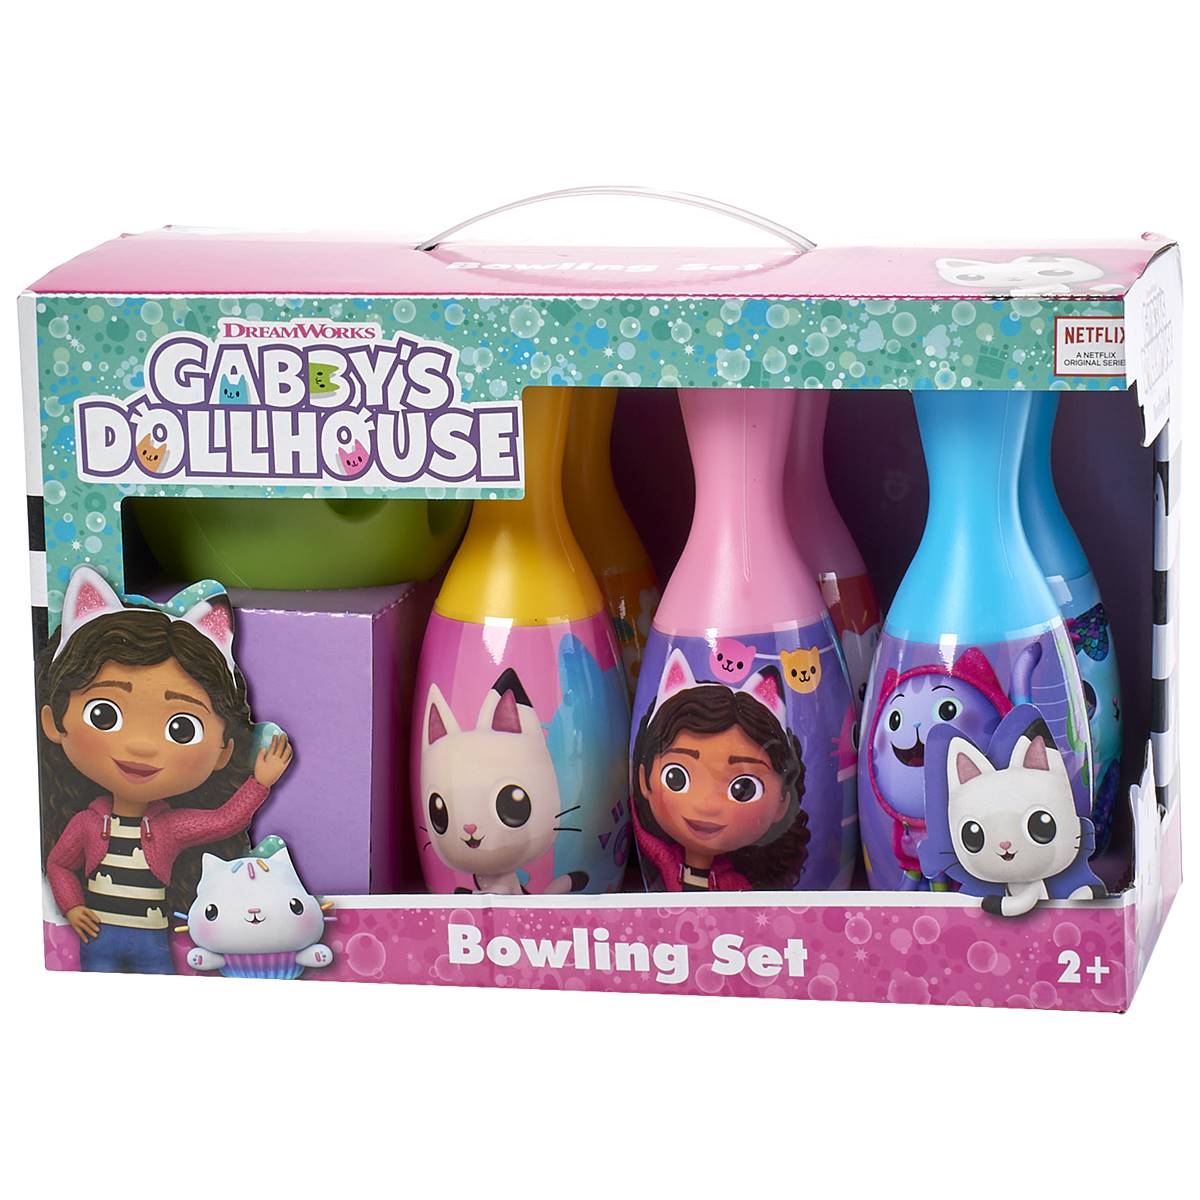 Gabby's Dollhouse Bowling Set